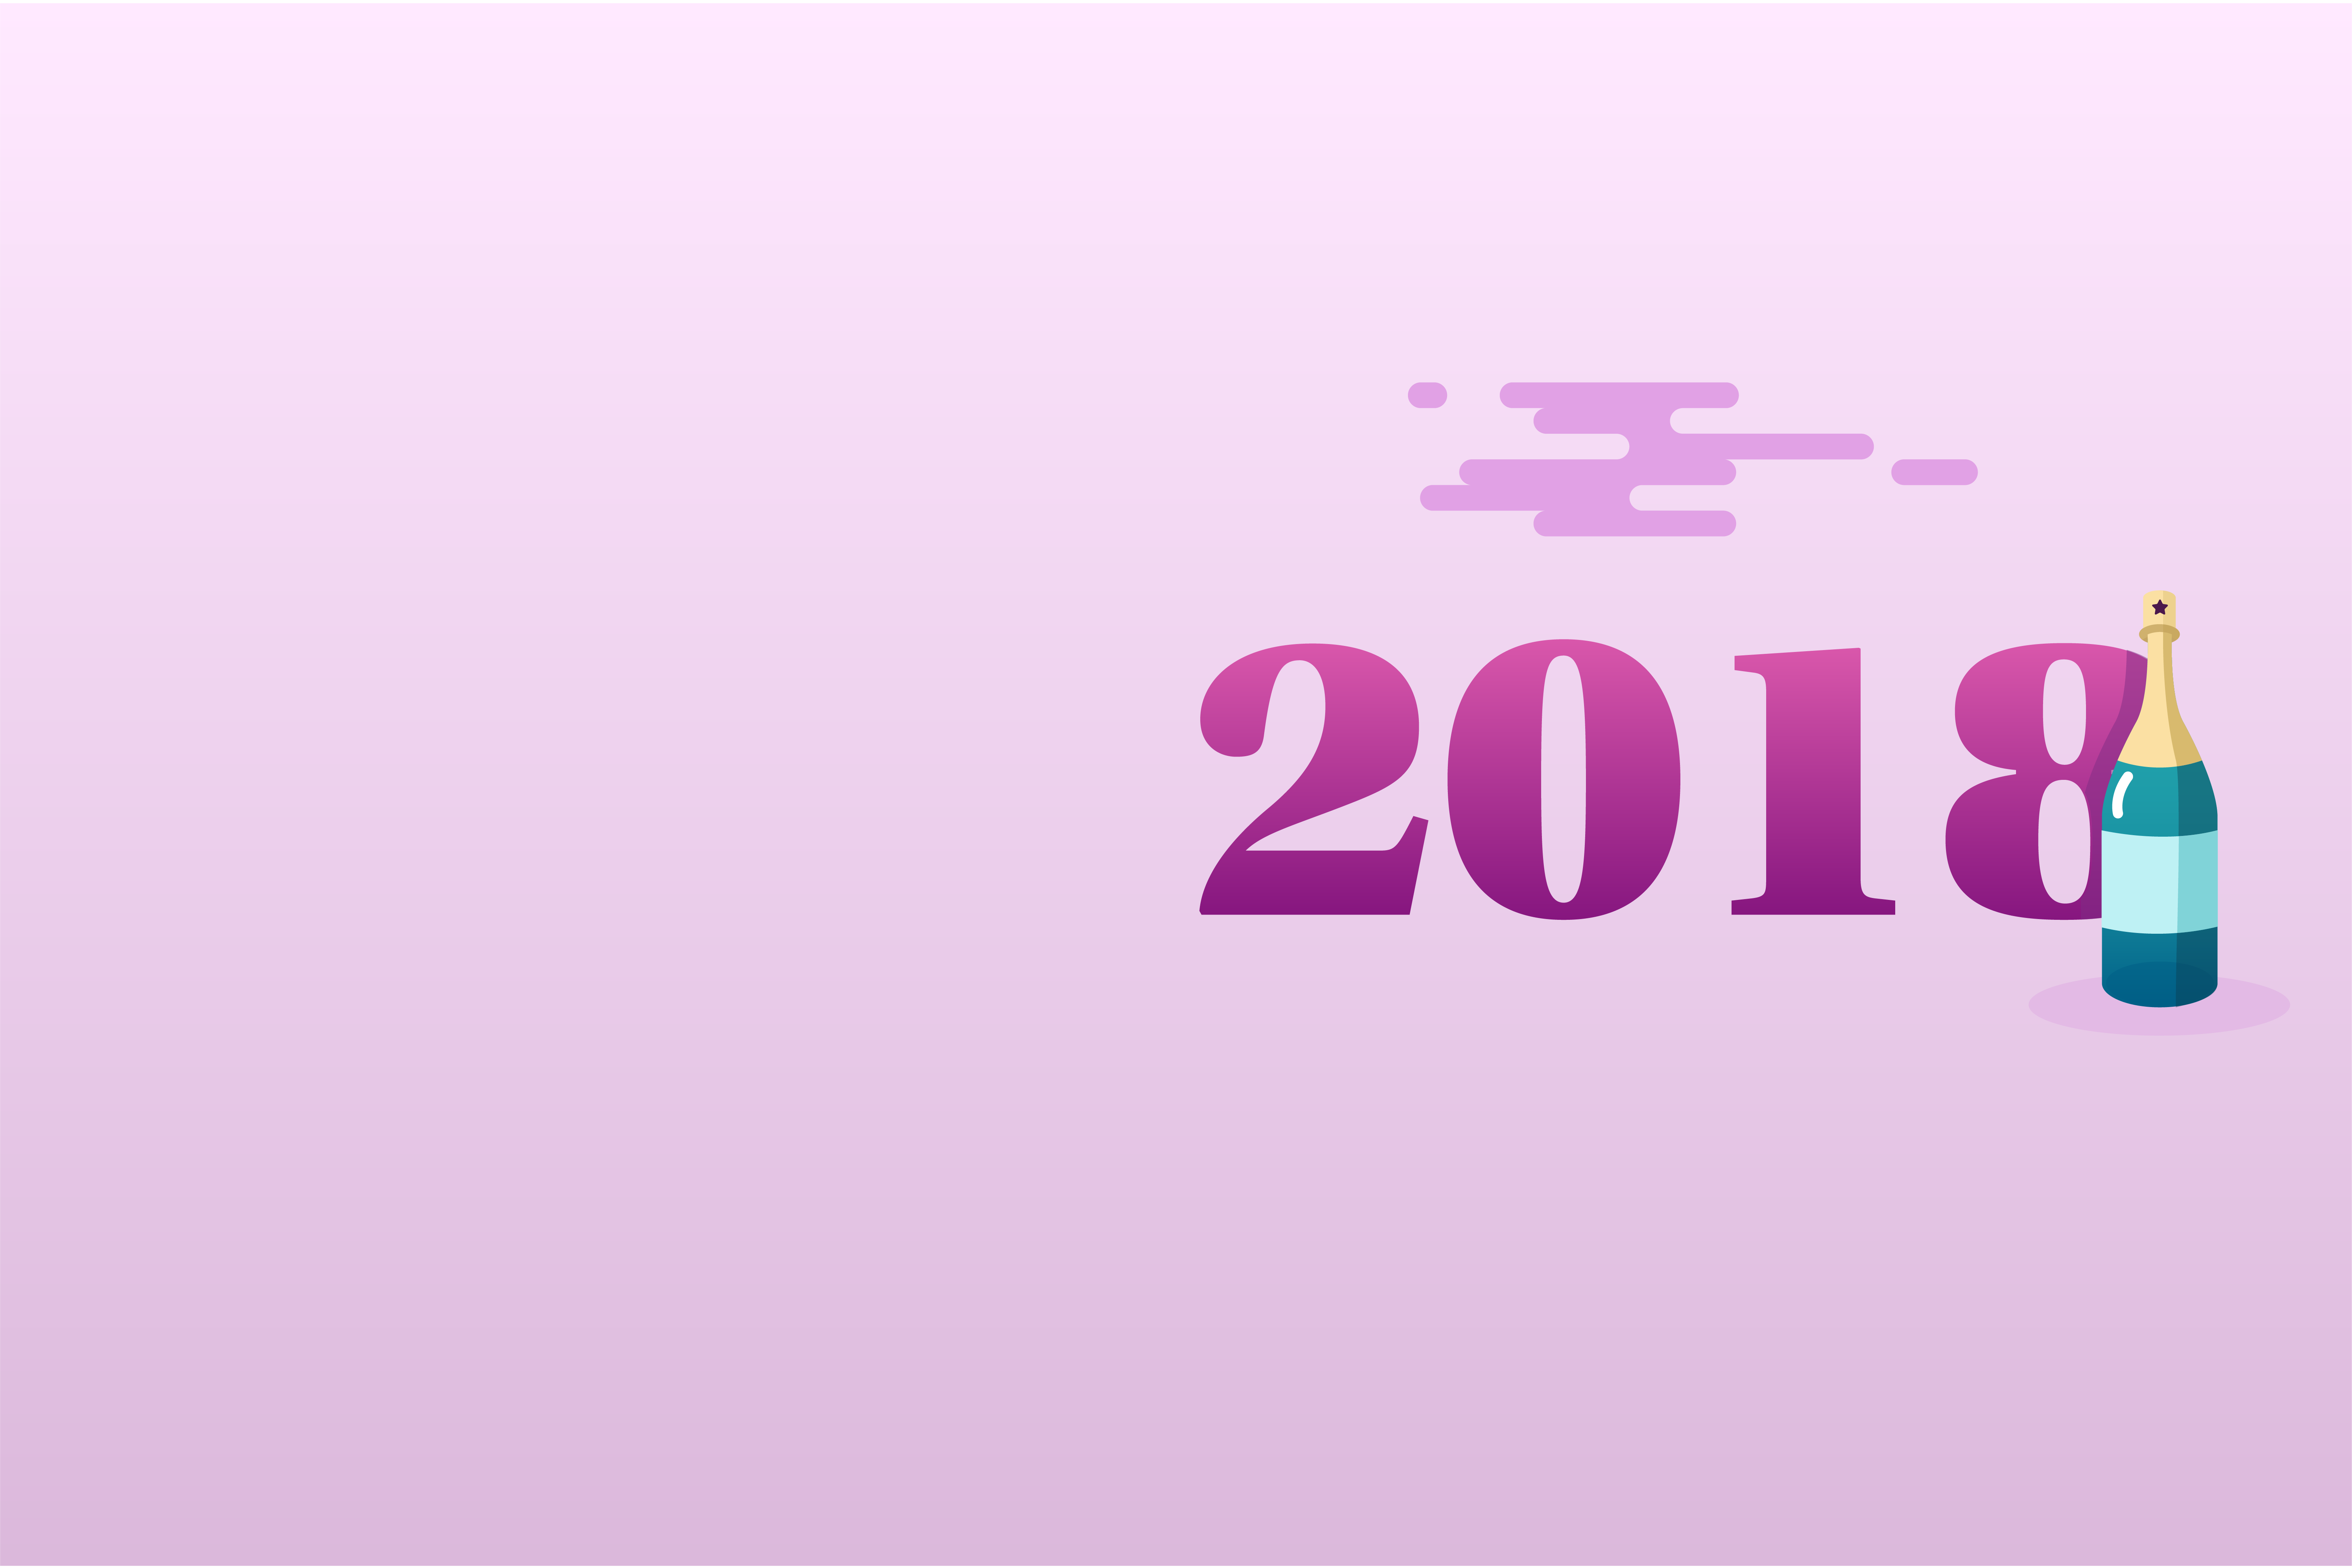 2018 year celebration graphic